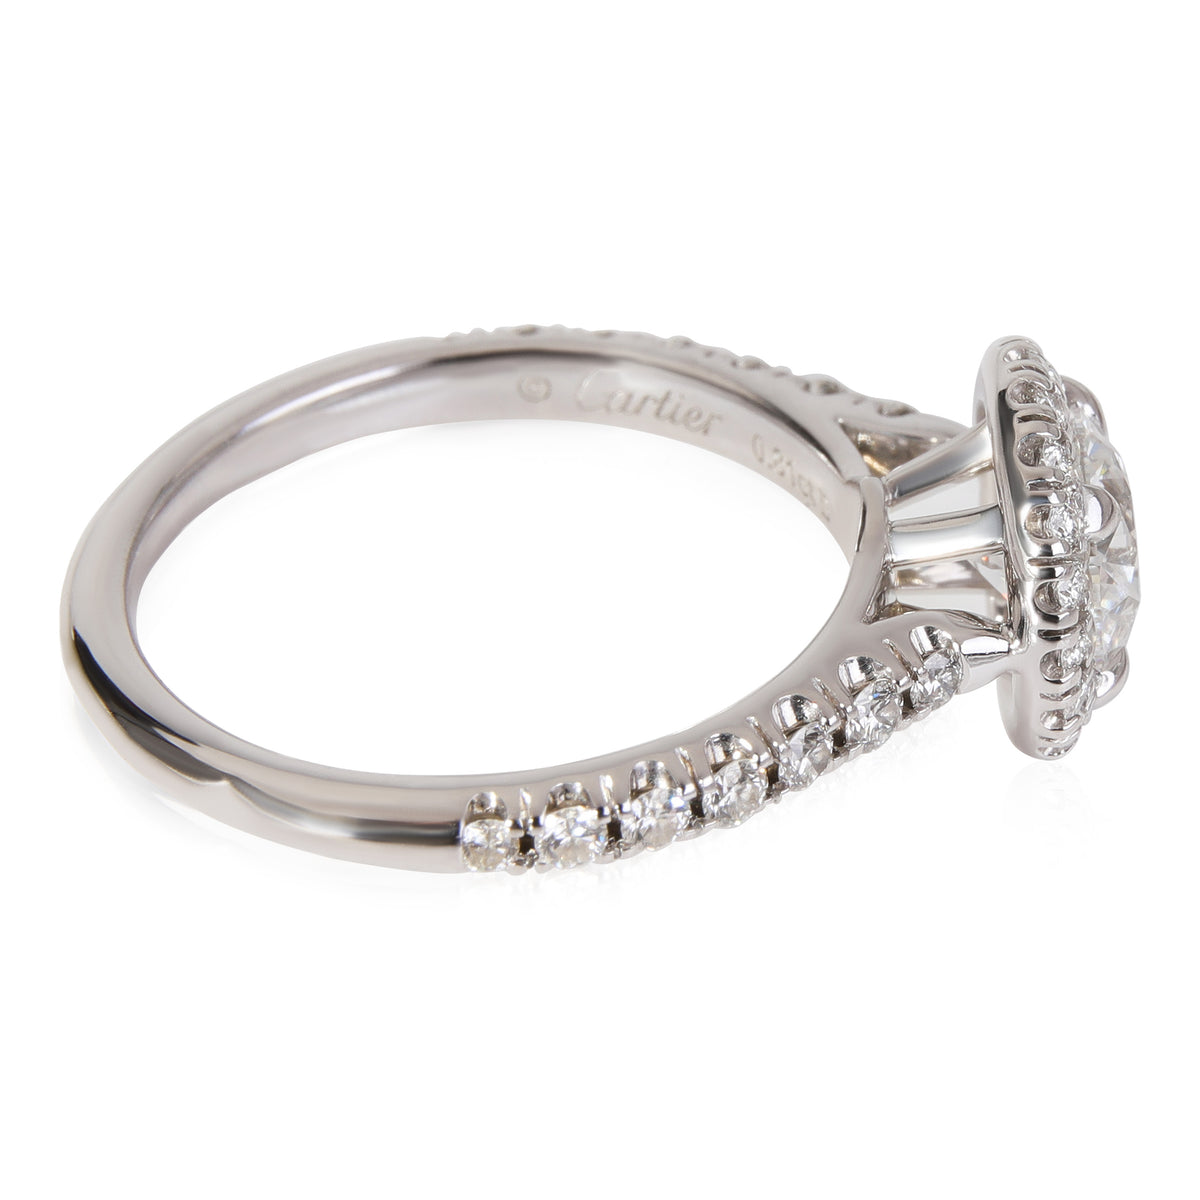 Cartier Destinee Halo Diamond Engagement Ring in Platinum D/IF 1.31 ctw